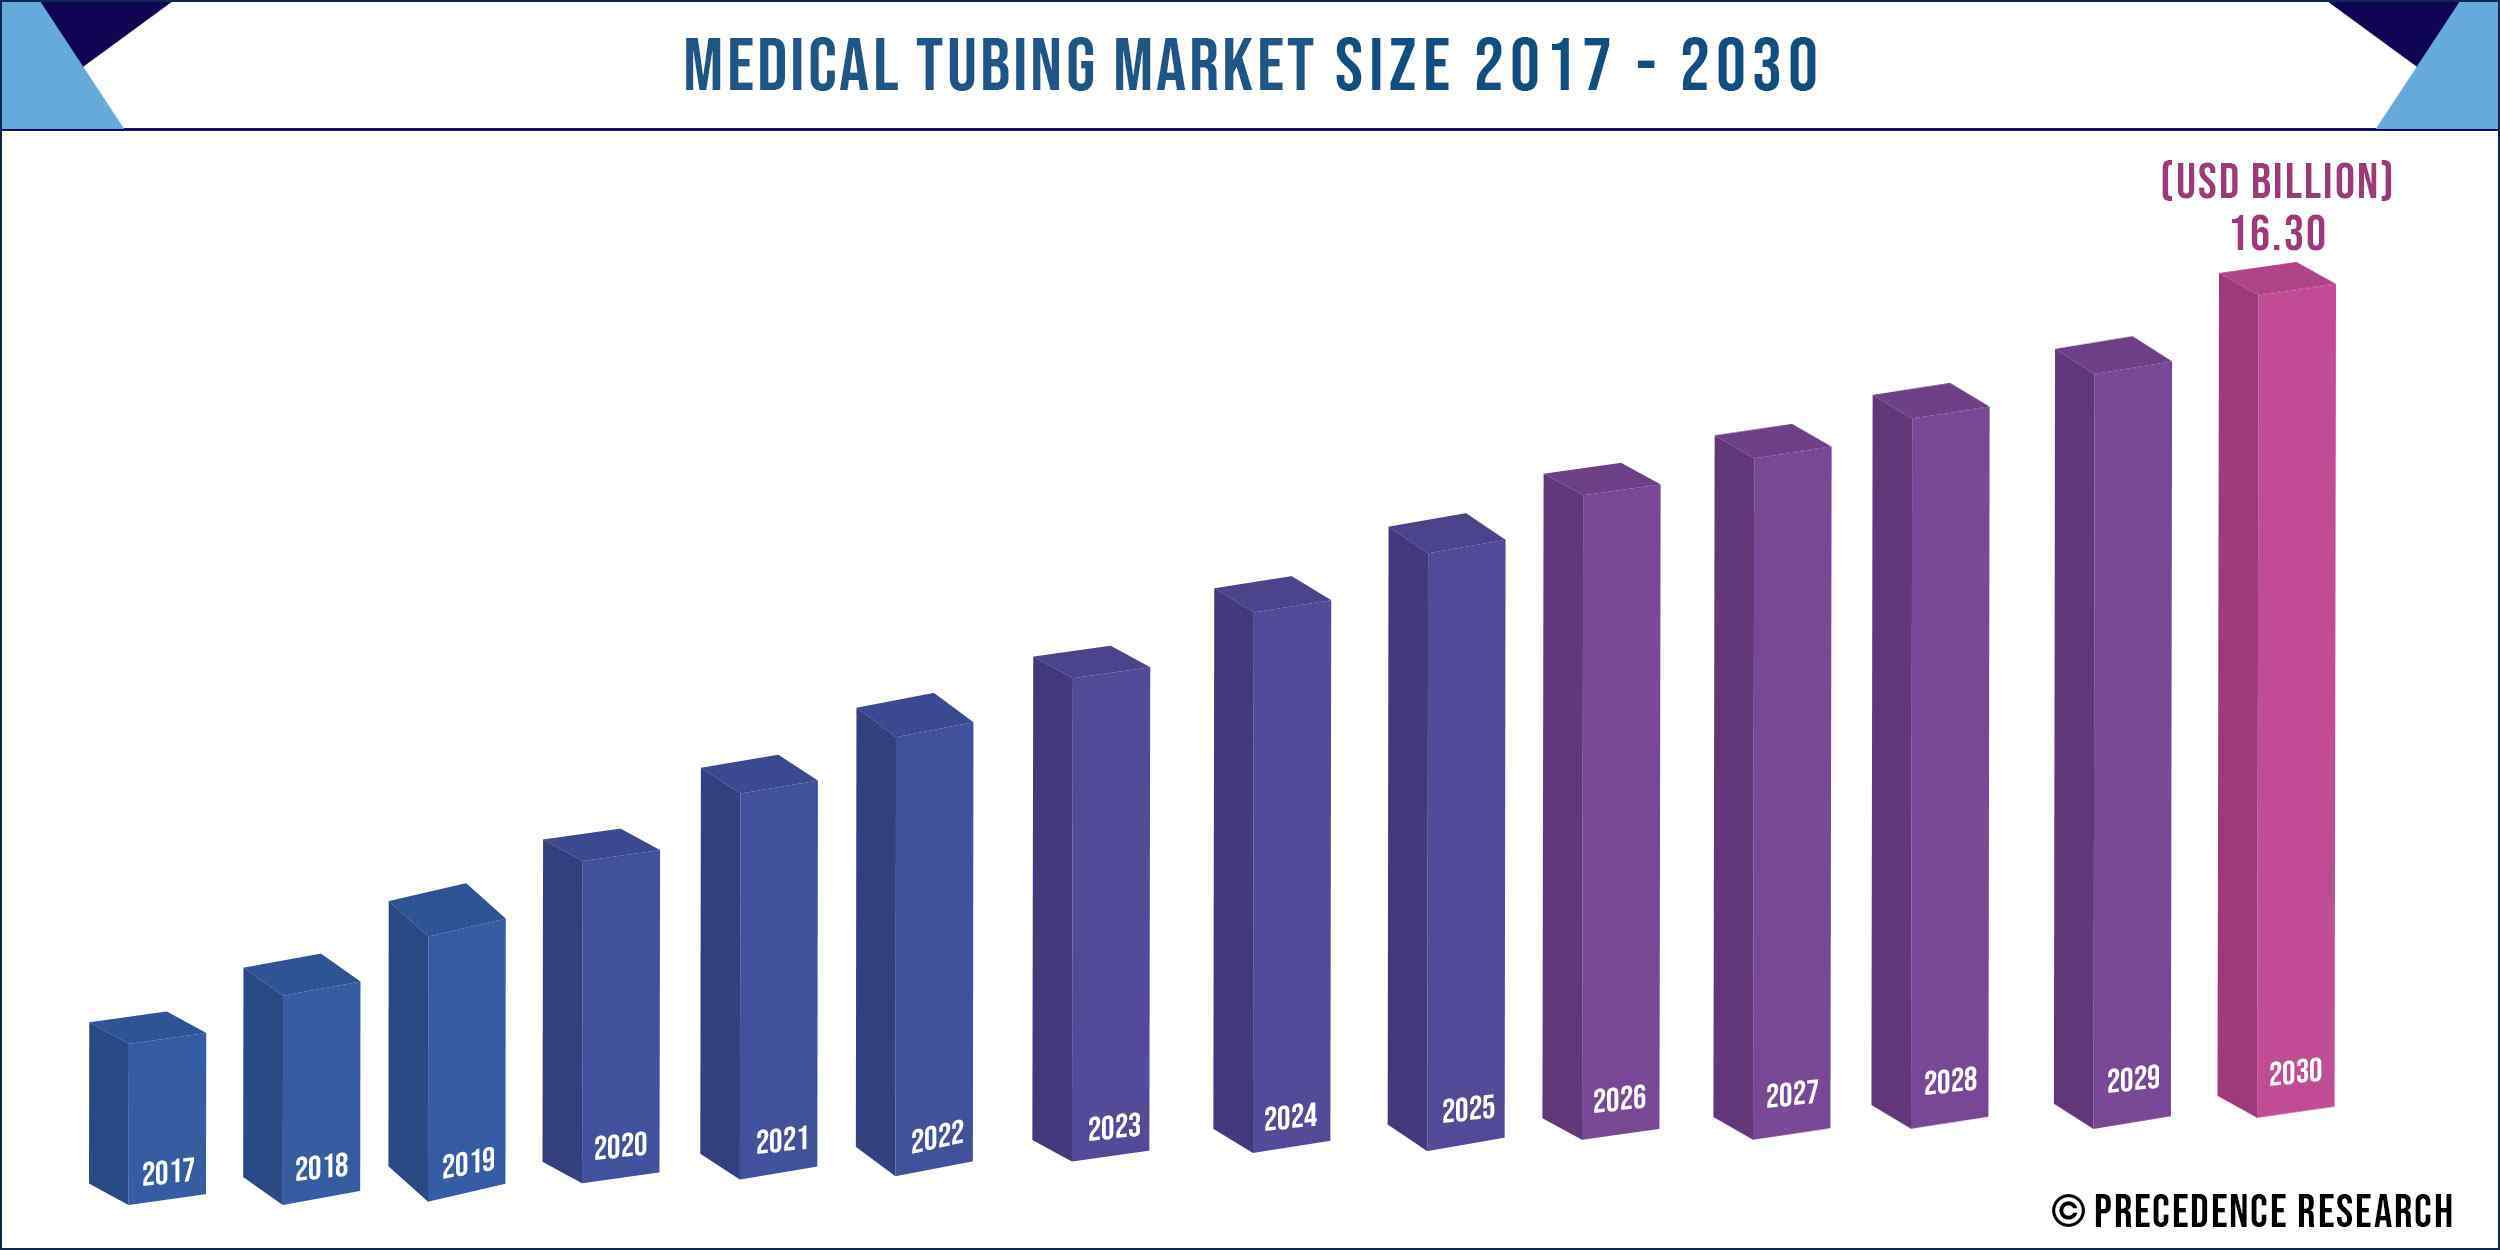 Medical Tubing Market Size 2017-2030